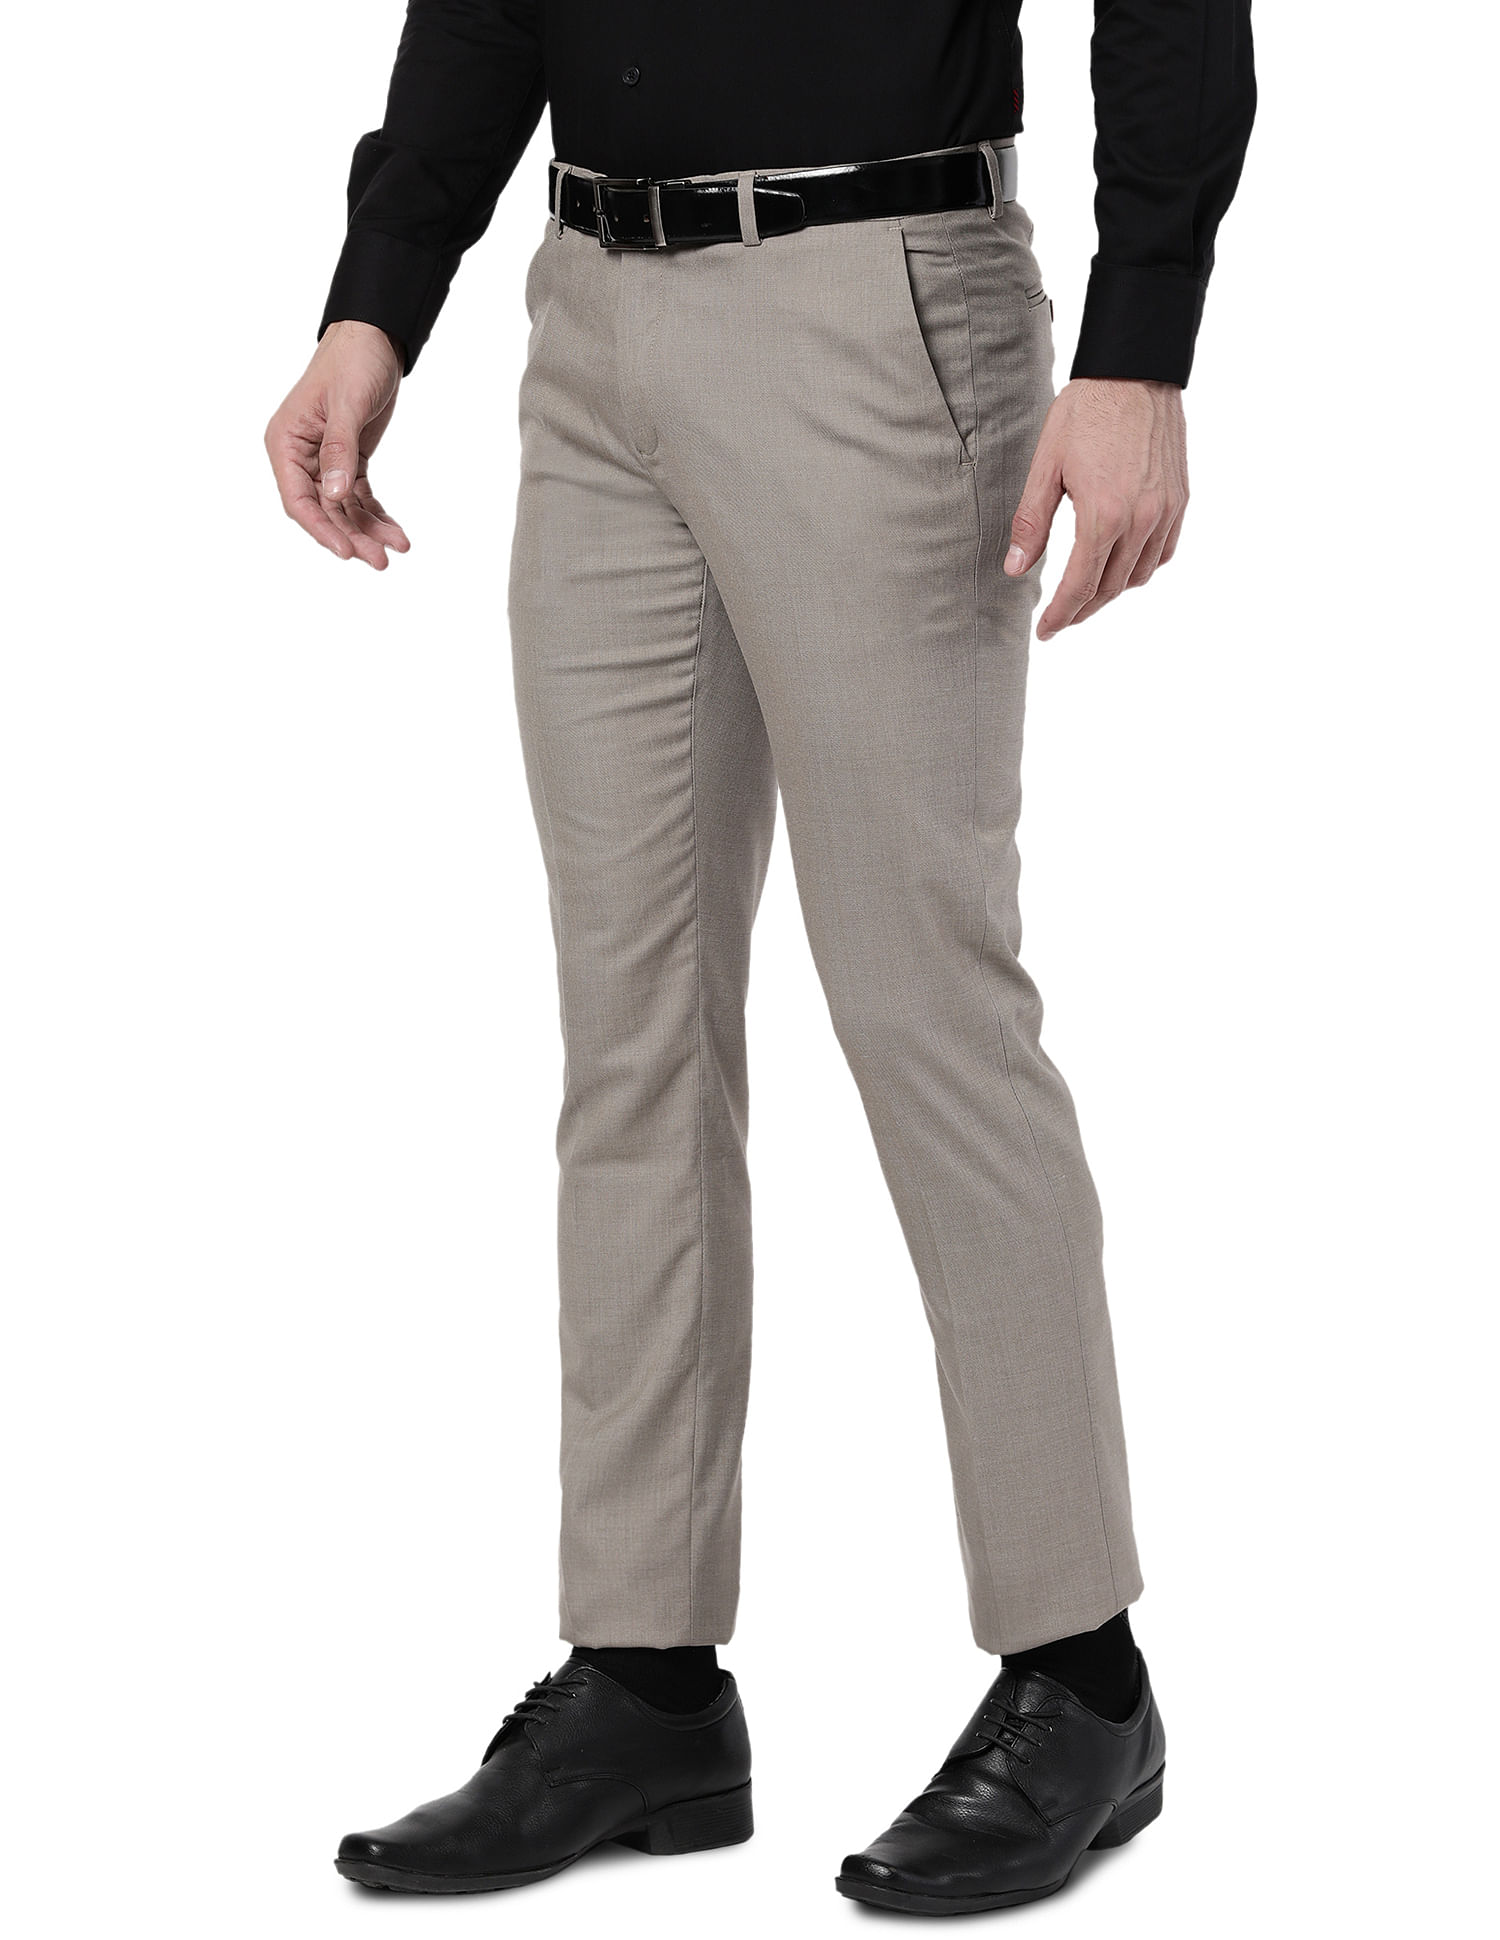 Jeans Men's Stone Island Trousers Casual Denim Cotton Trousers Beige Size  40 | eBay